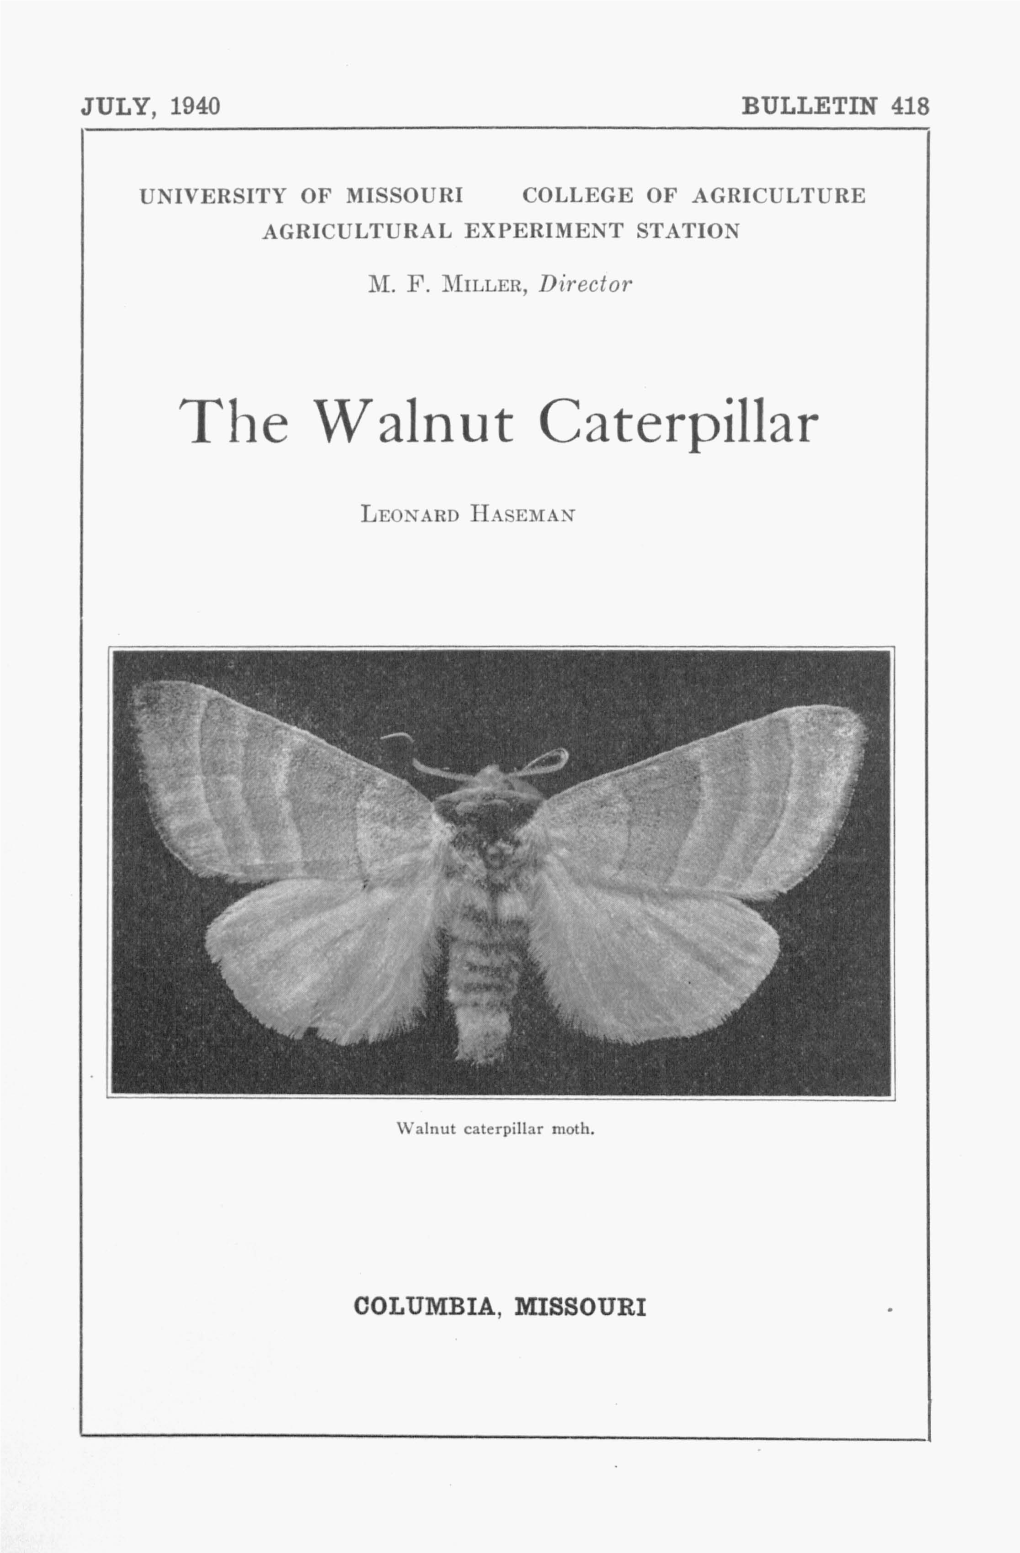 The Walnut Caterpillar